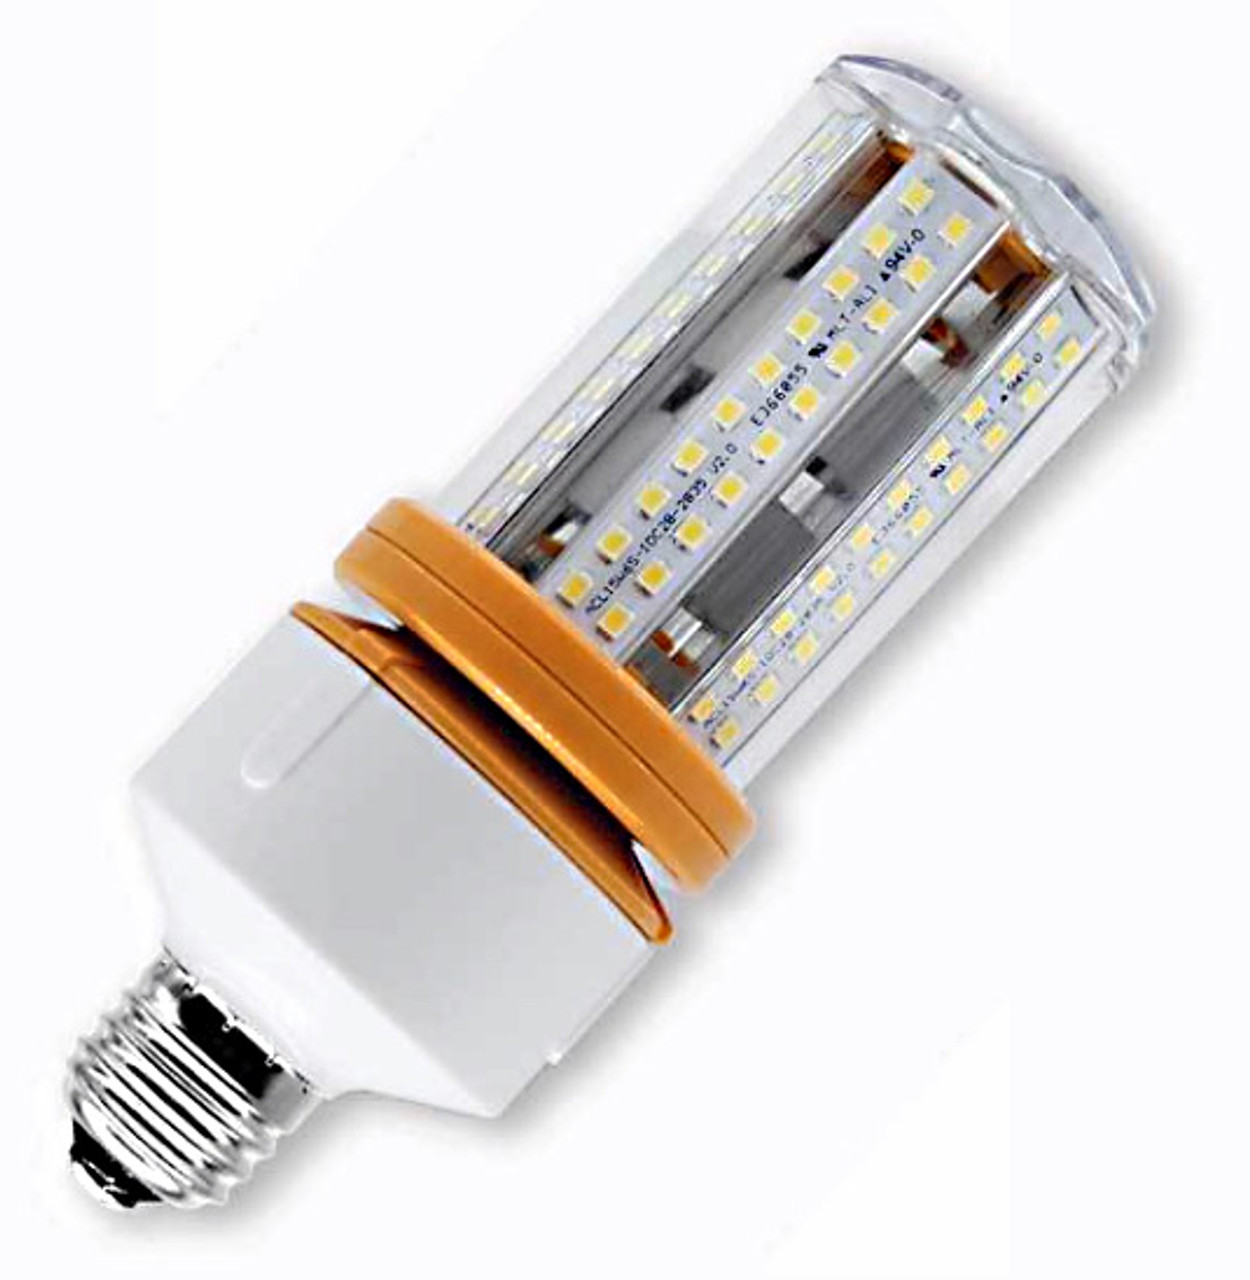 Word gek Maryanne Jones Resistent 15 Watt LED Retrofit Replacement For 75 Watt Metal Halide Bulb